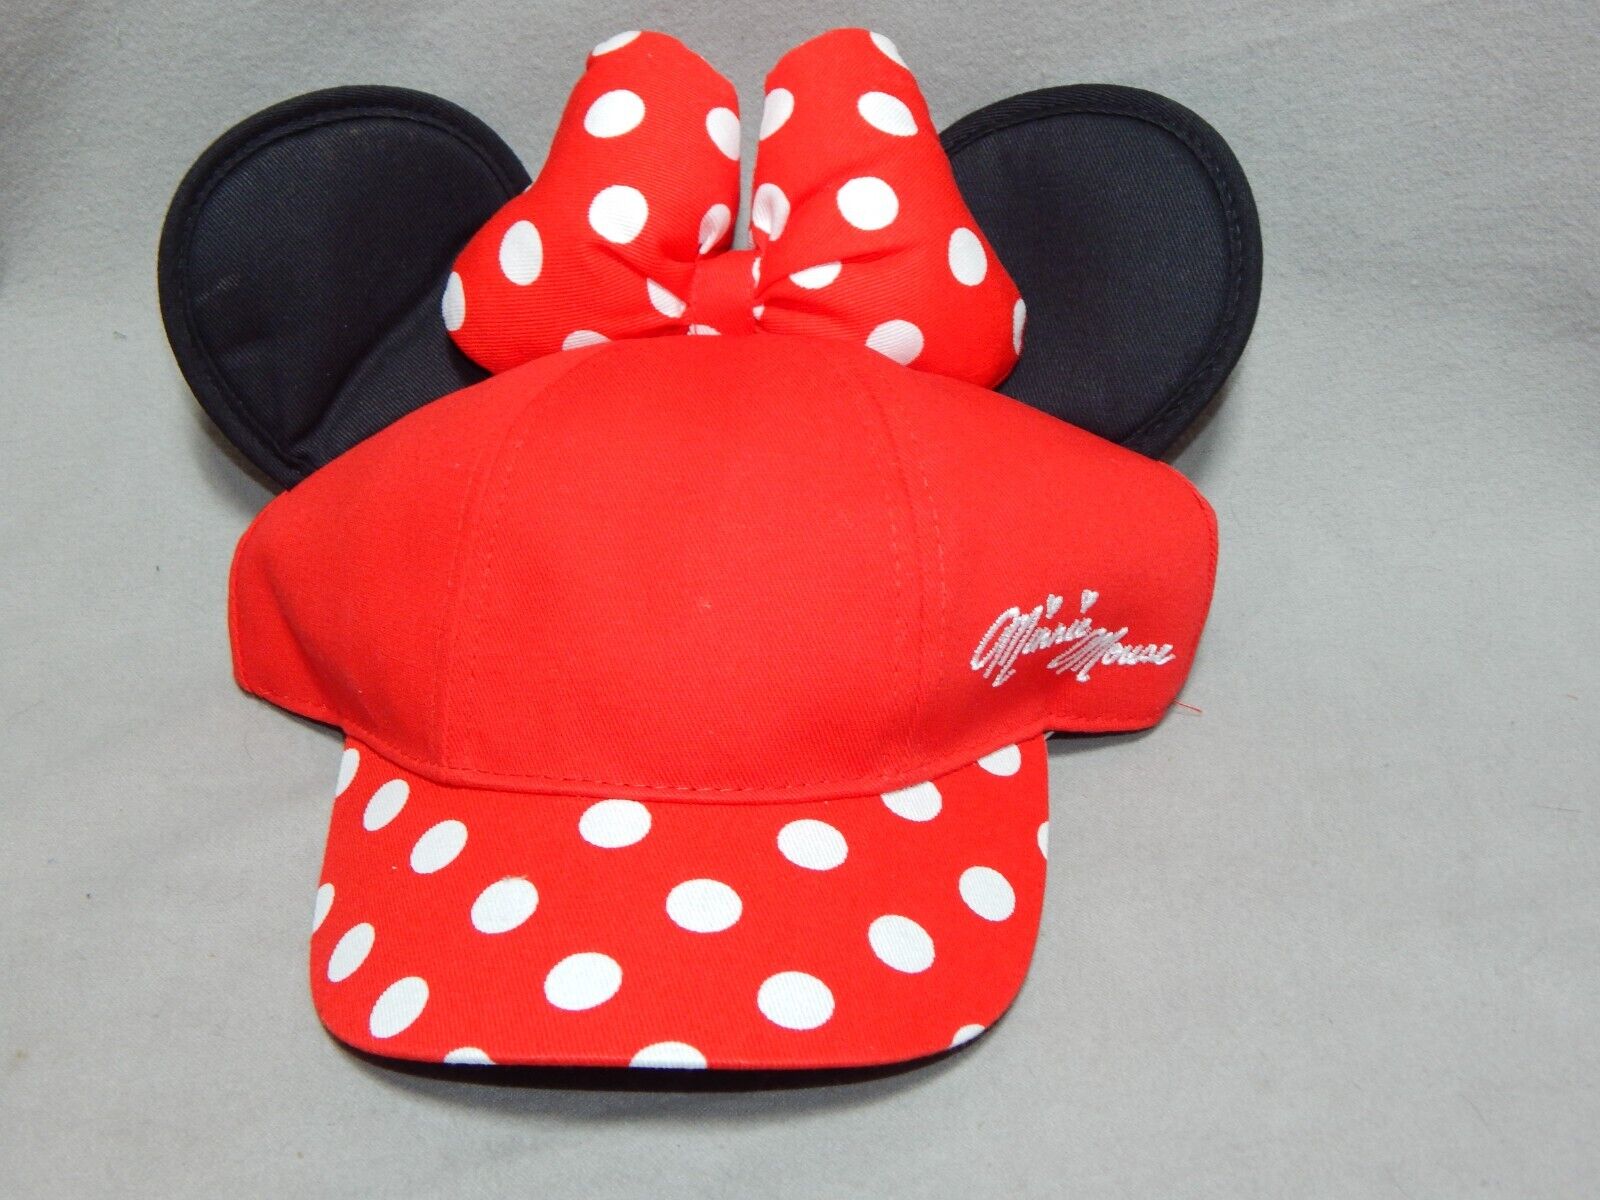 Genuine Disney Theme Park Minnie Mouse size youth red w/ white polka dot cap hat